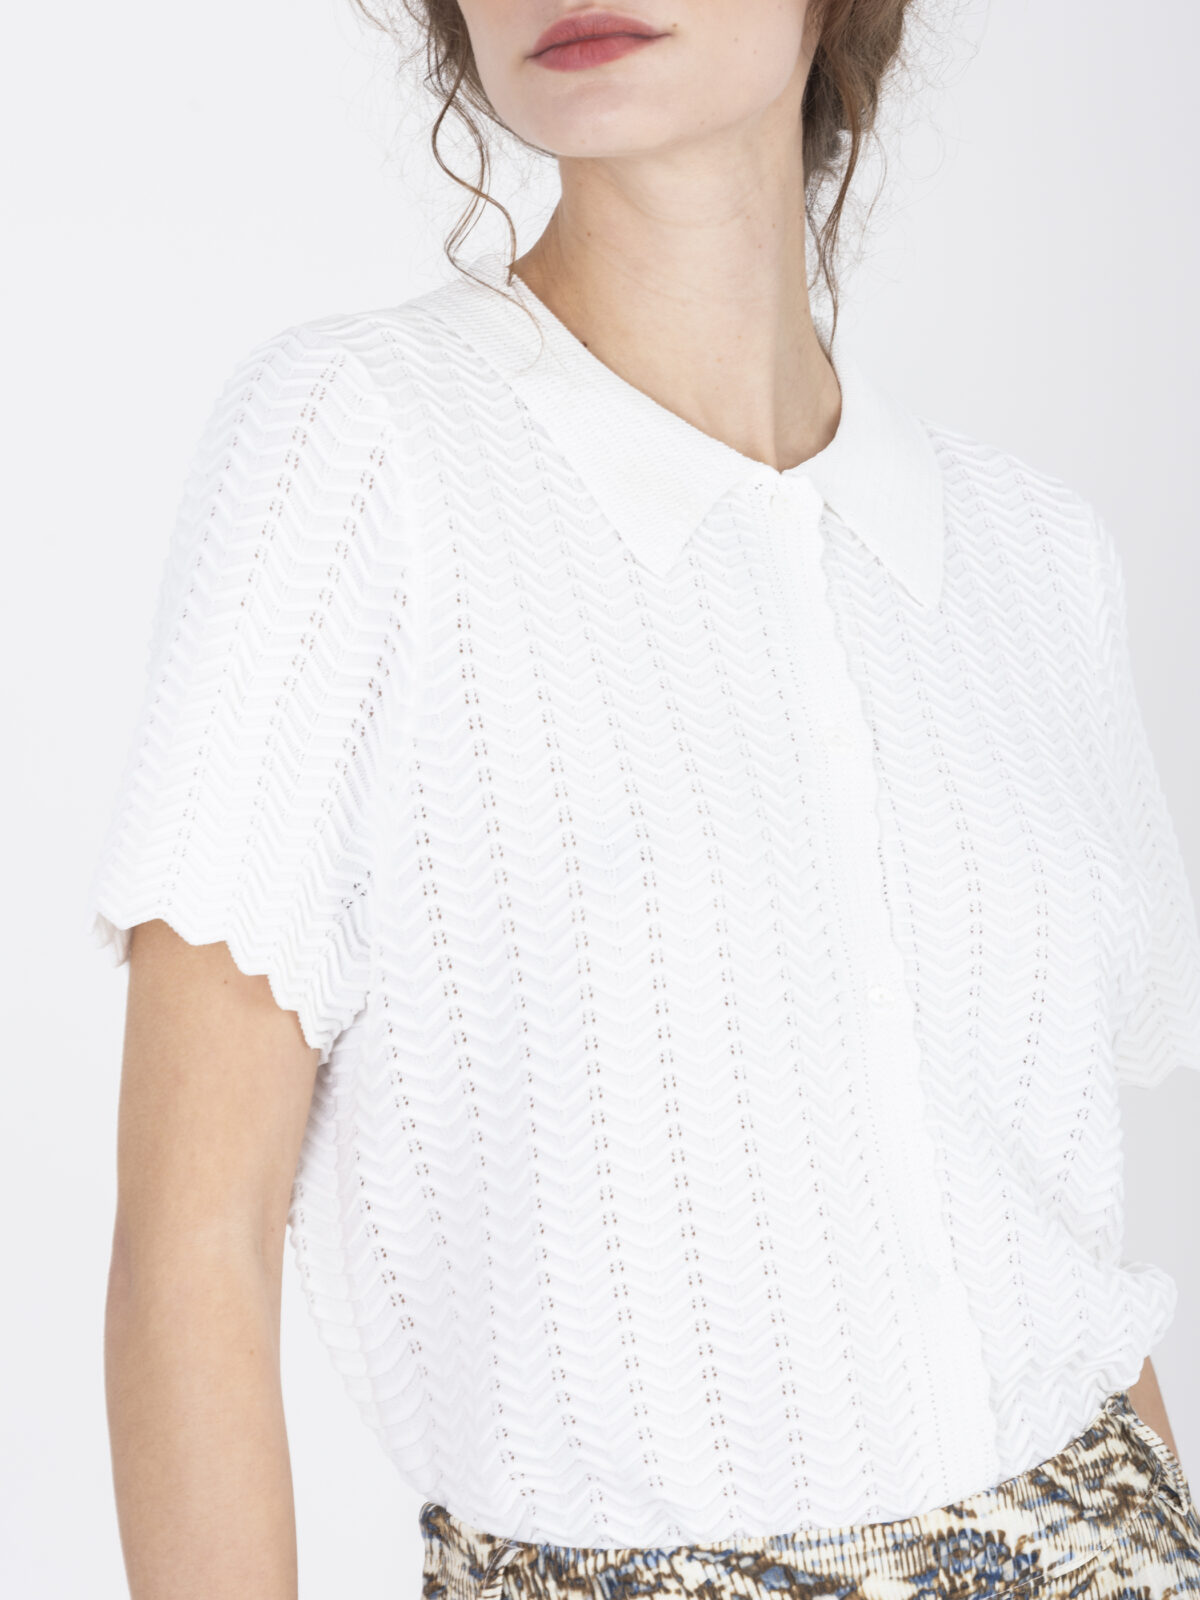 giblis-knit-white-shirt-ribbed-collar-short-sleeves-suncoo-matchboxathens